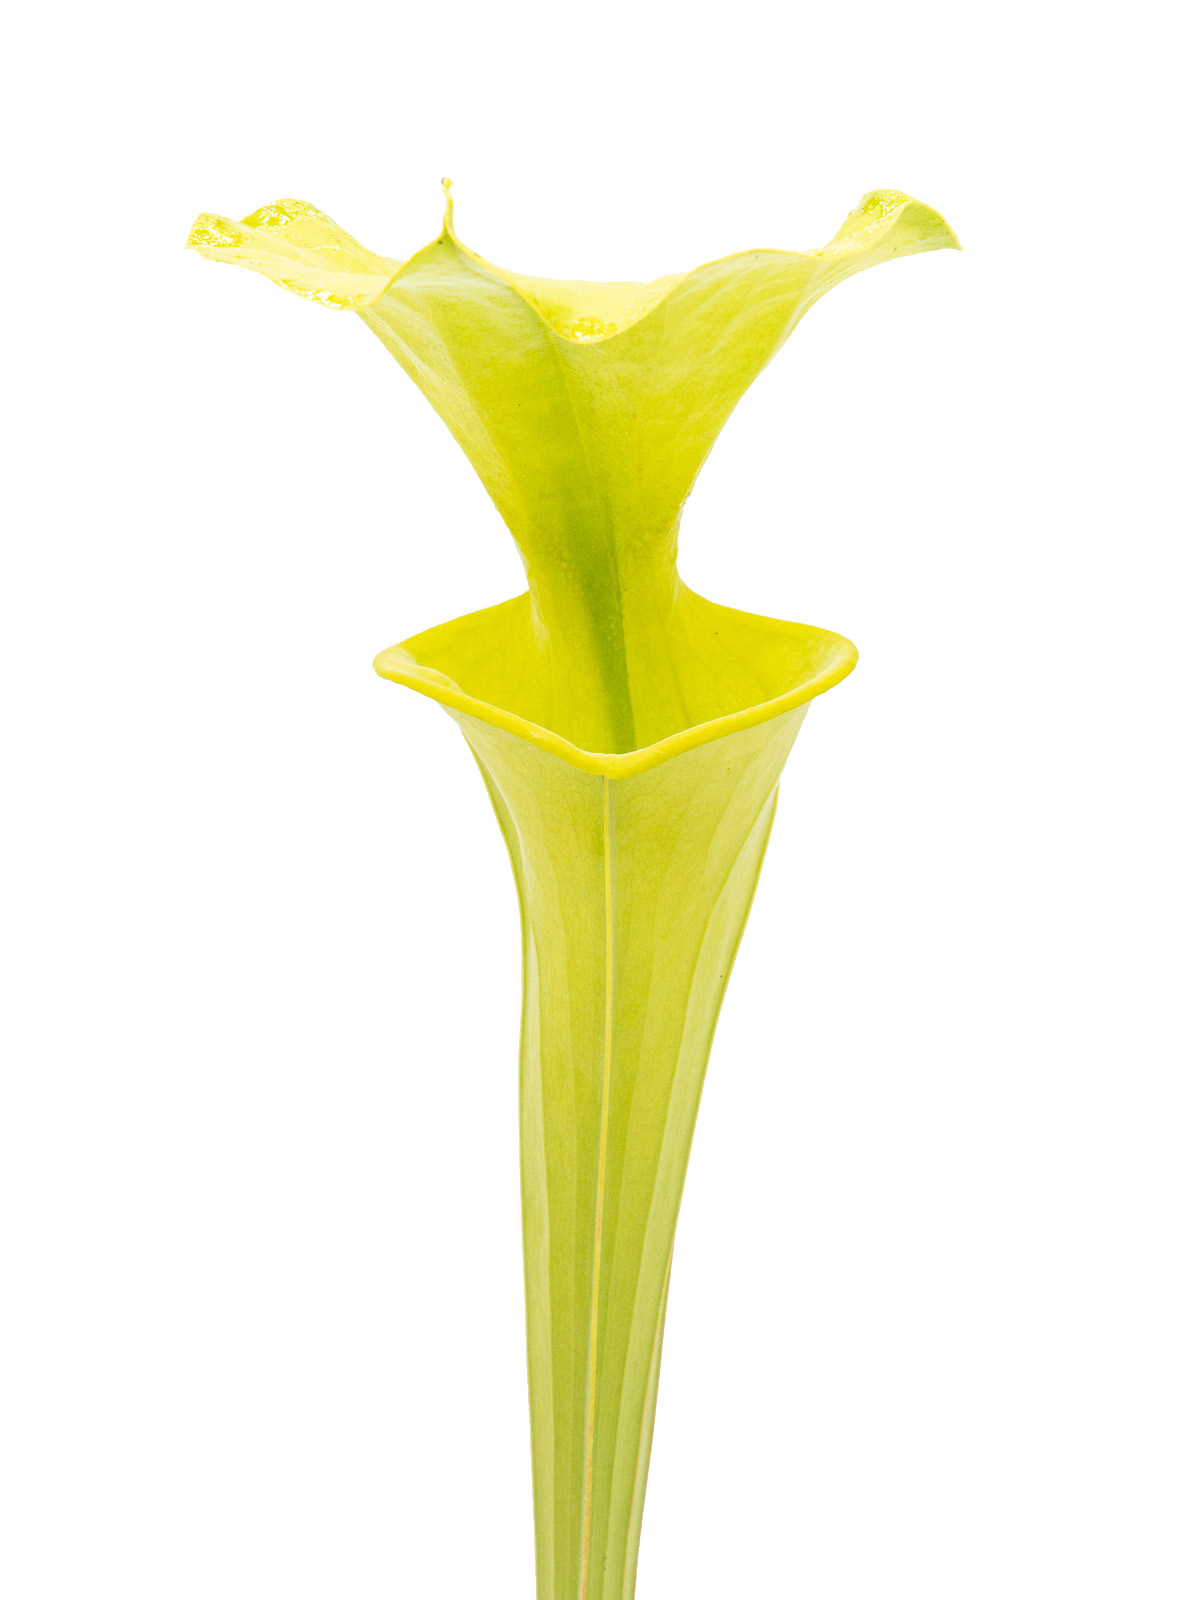 Sarracenia flava var. flava - Yellow pitchers, PW F27